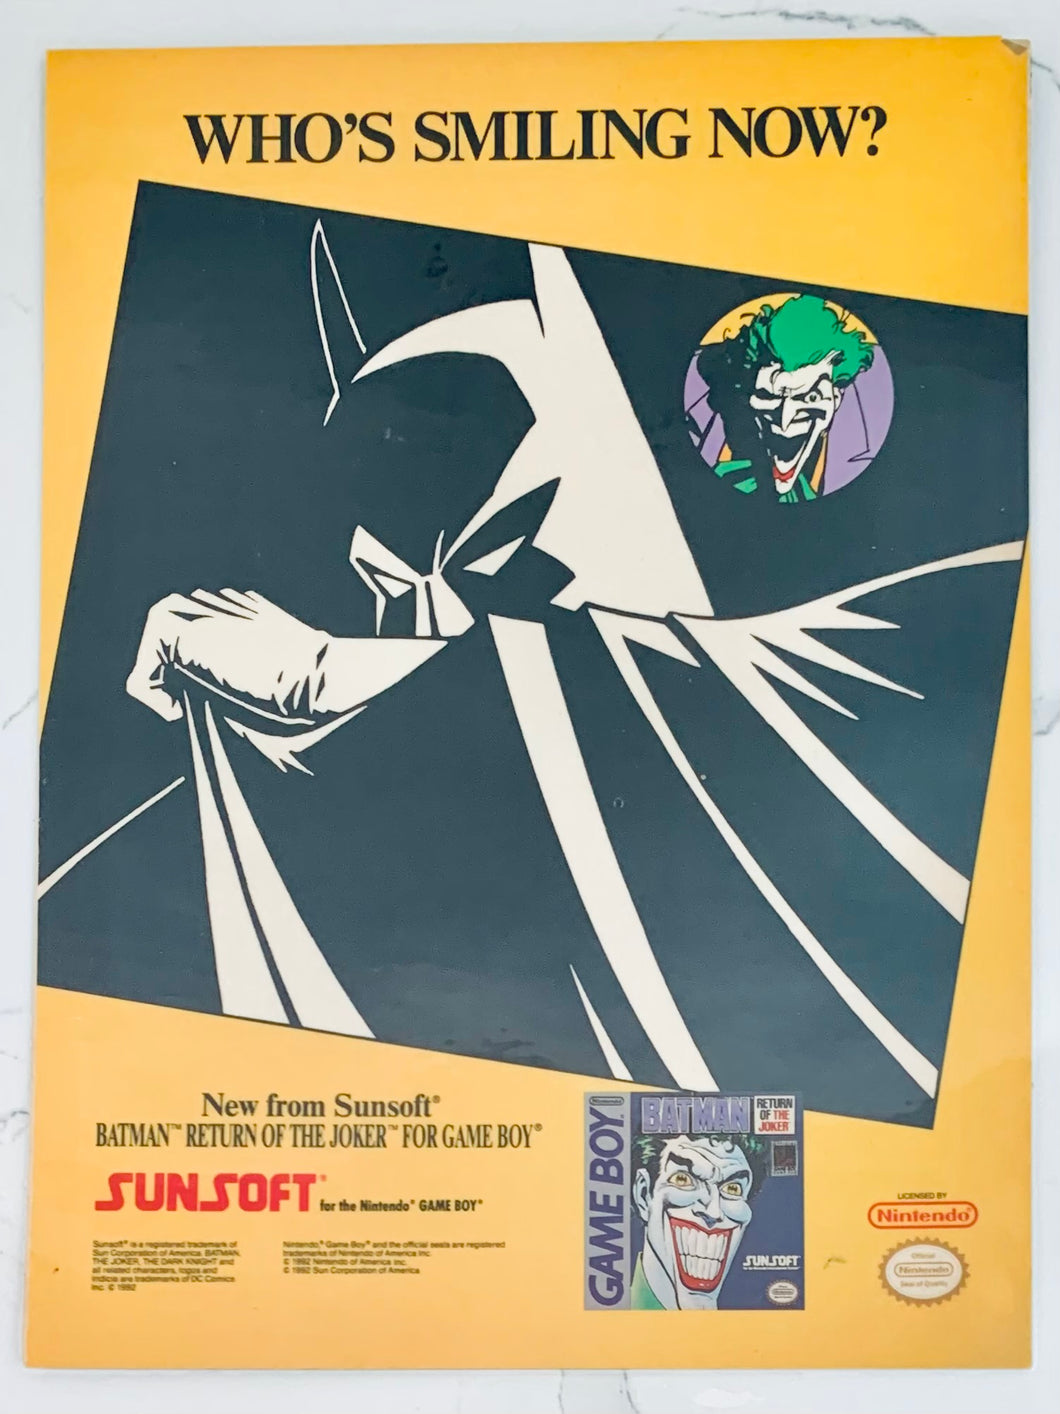 Batman: Return of the Joker - GameBoy - Original Vintage Advertisement - Print Ads - Laminated A4 Poster